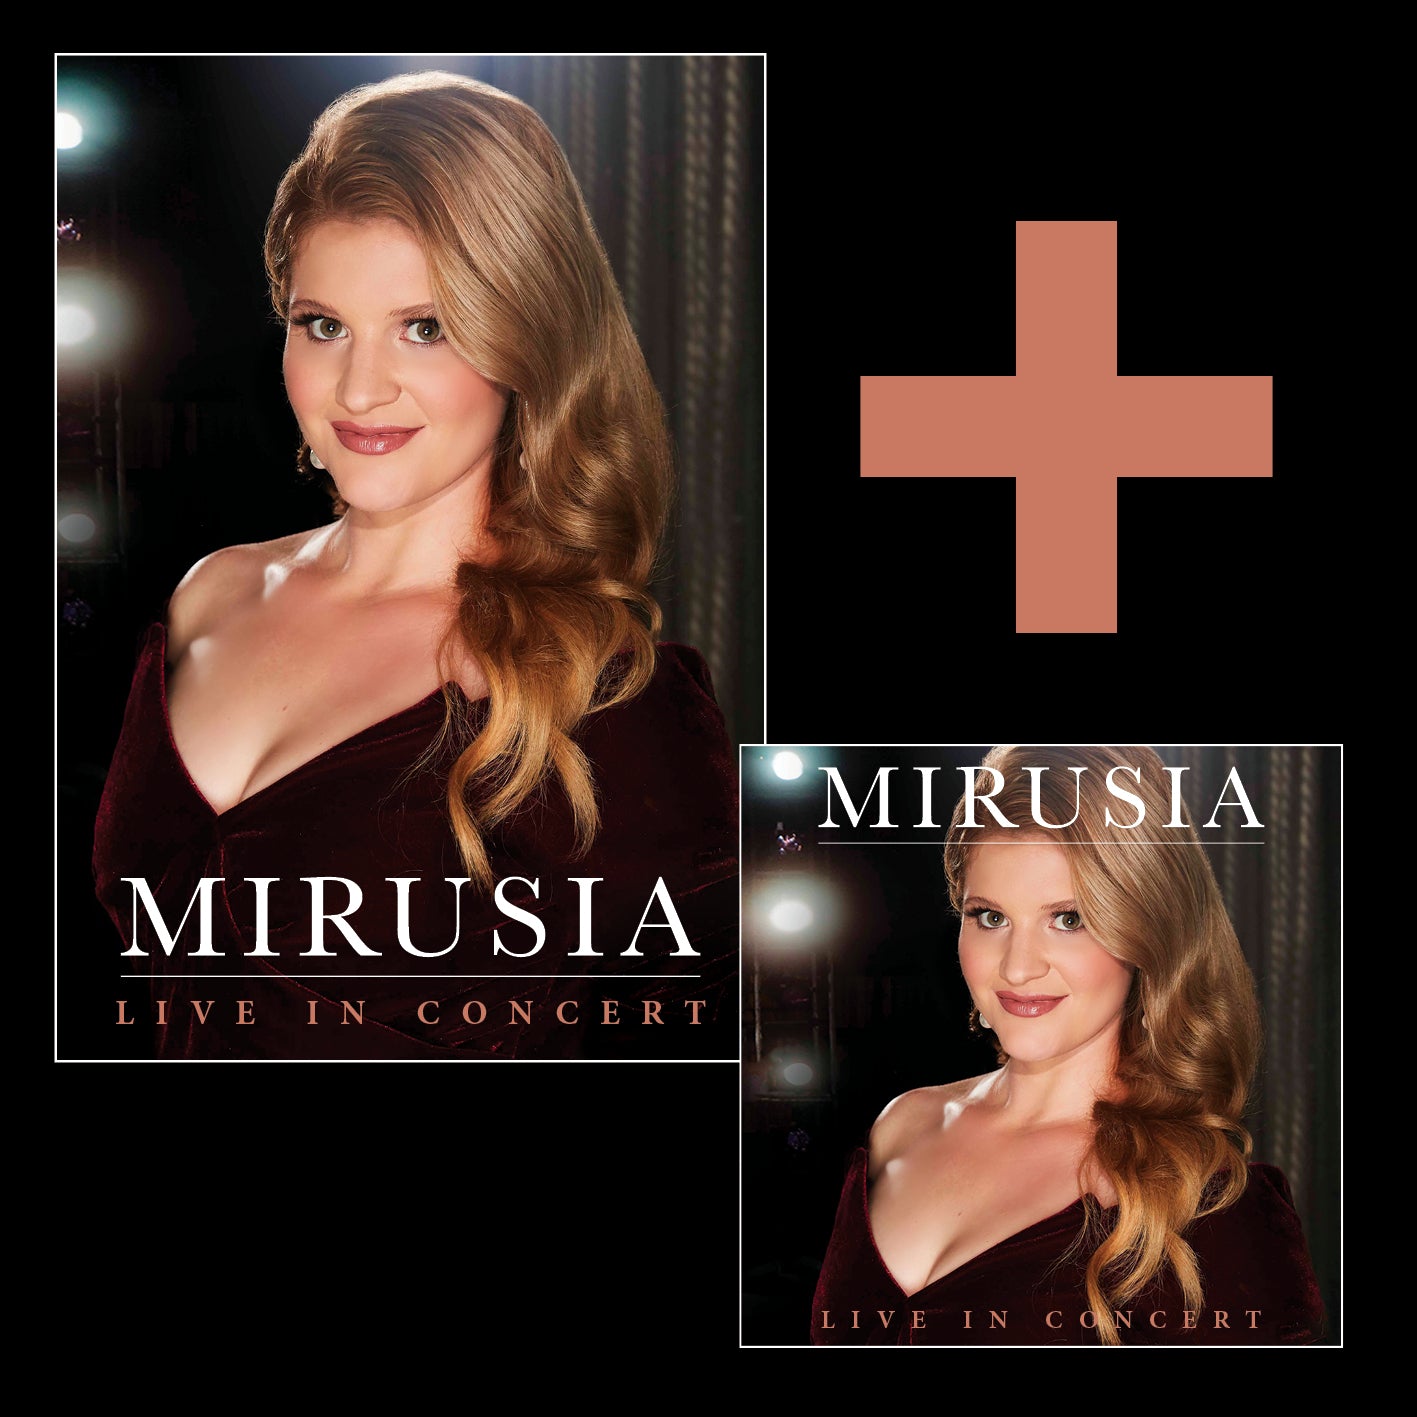 MIRUSIA - LIVE IN CONCERT (CD + DVD BUNDLE)